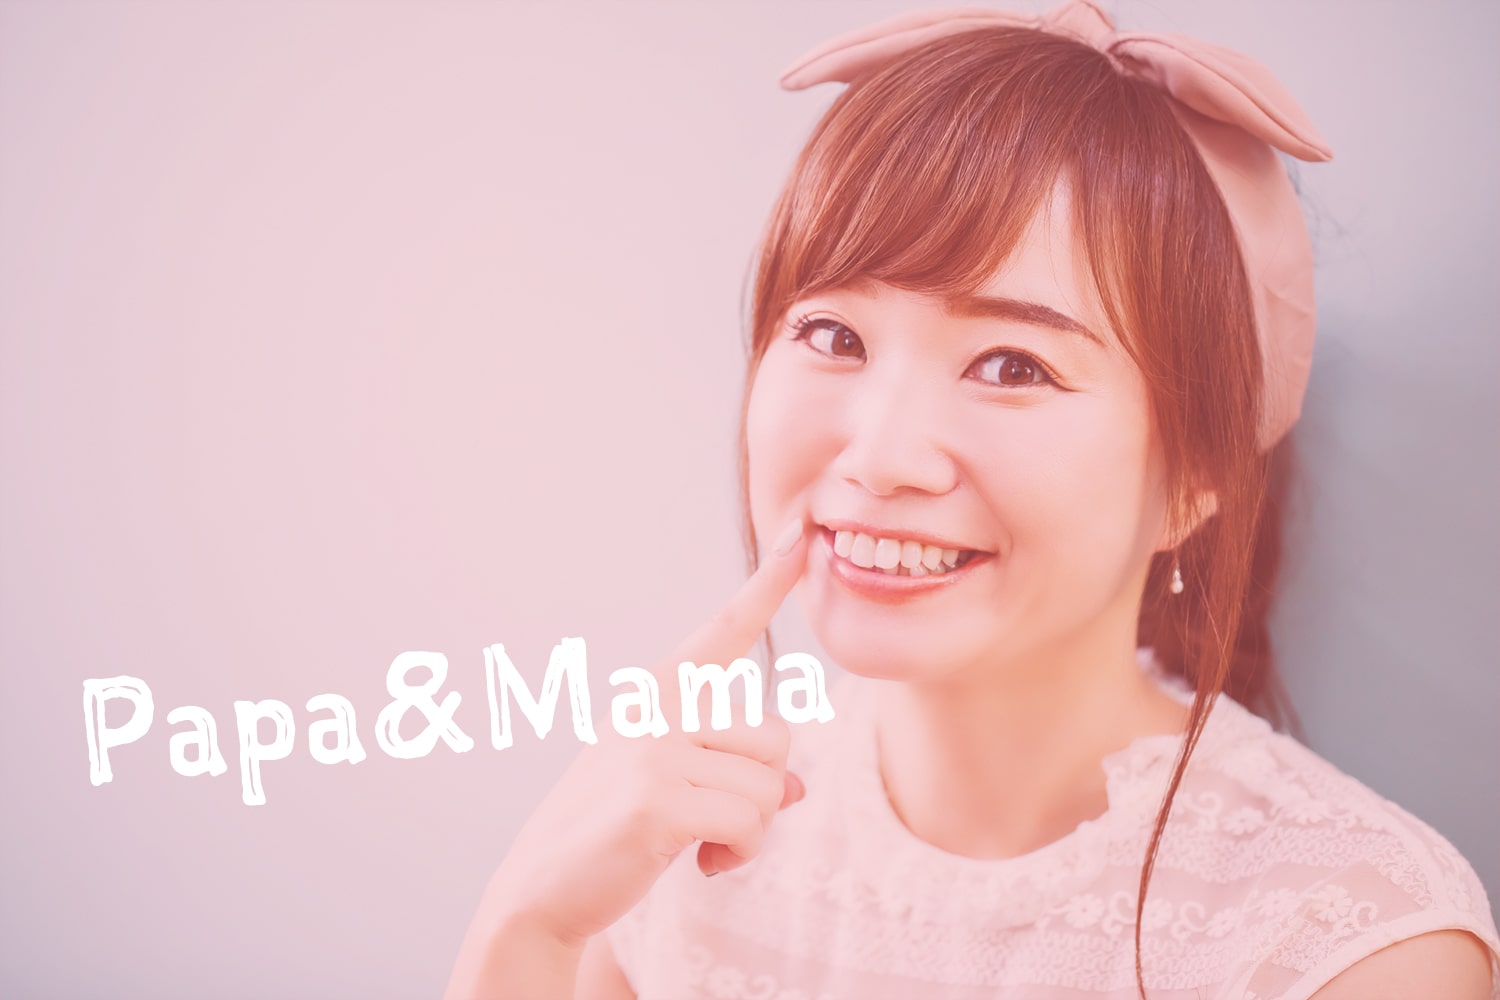 Papa&Mama